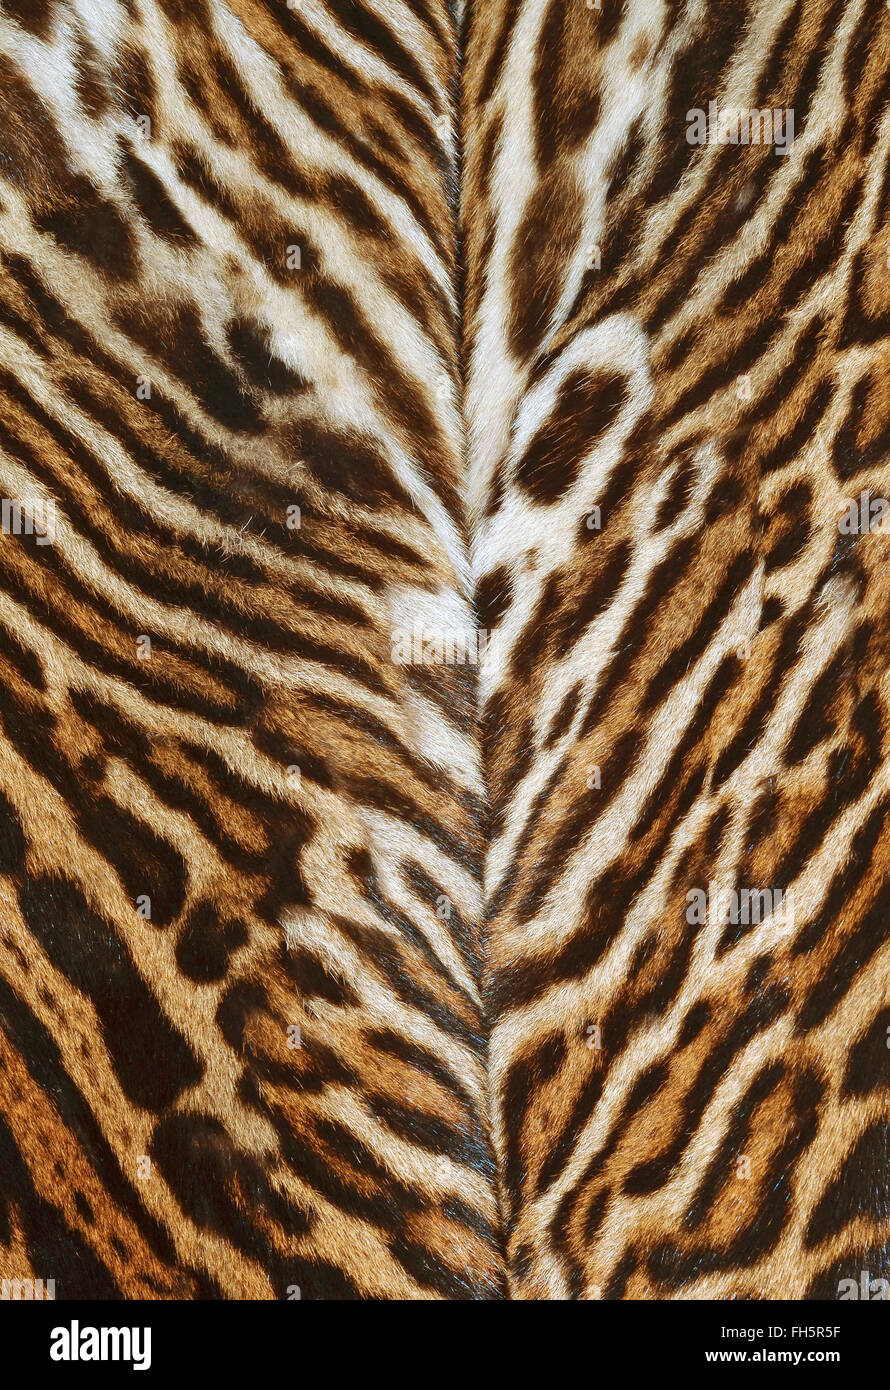 pelliccia di Ocelot Foto stock - Alamy